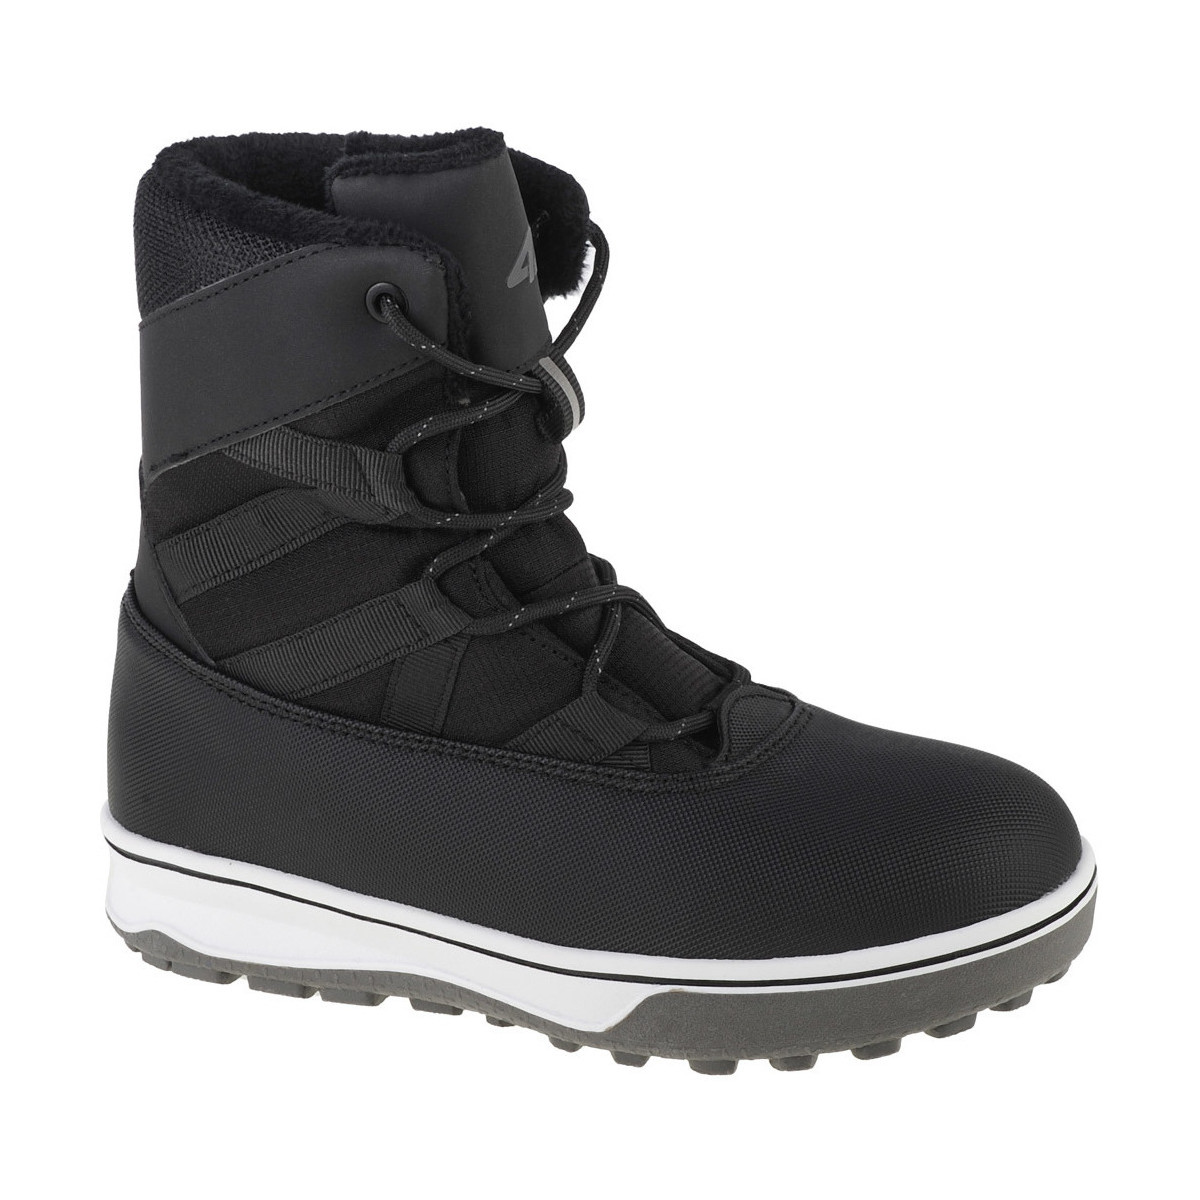 Zapatos Niña Botas de nieve 4F Kids Snow Boots Negro